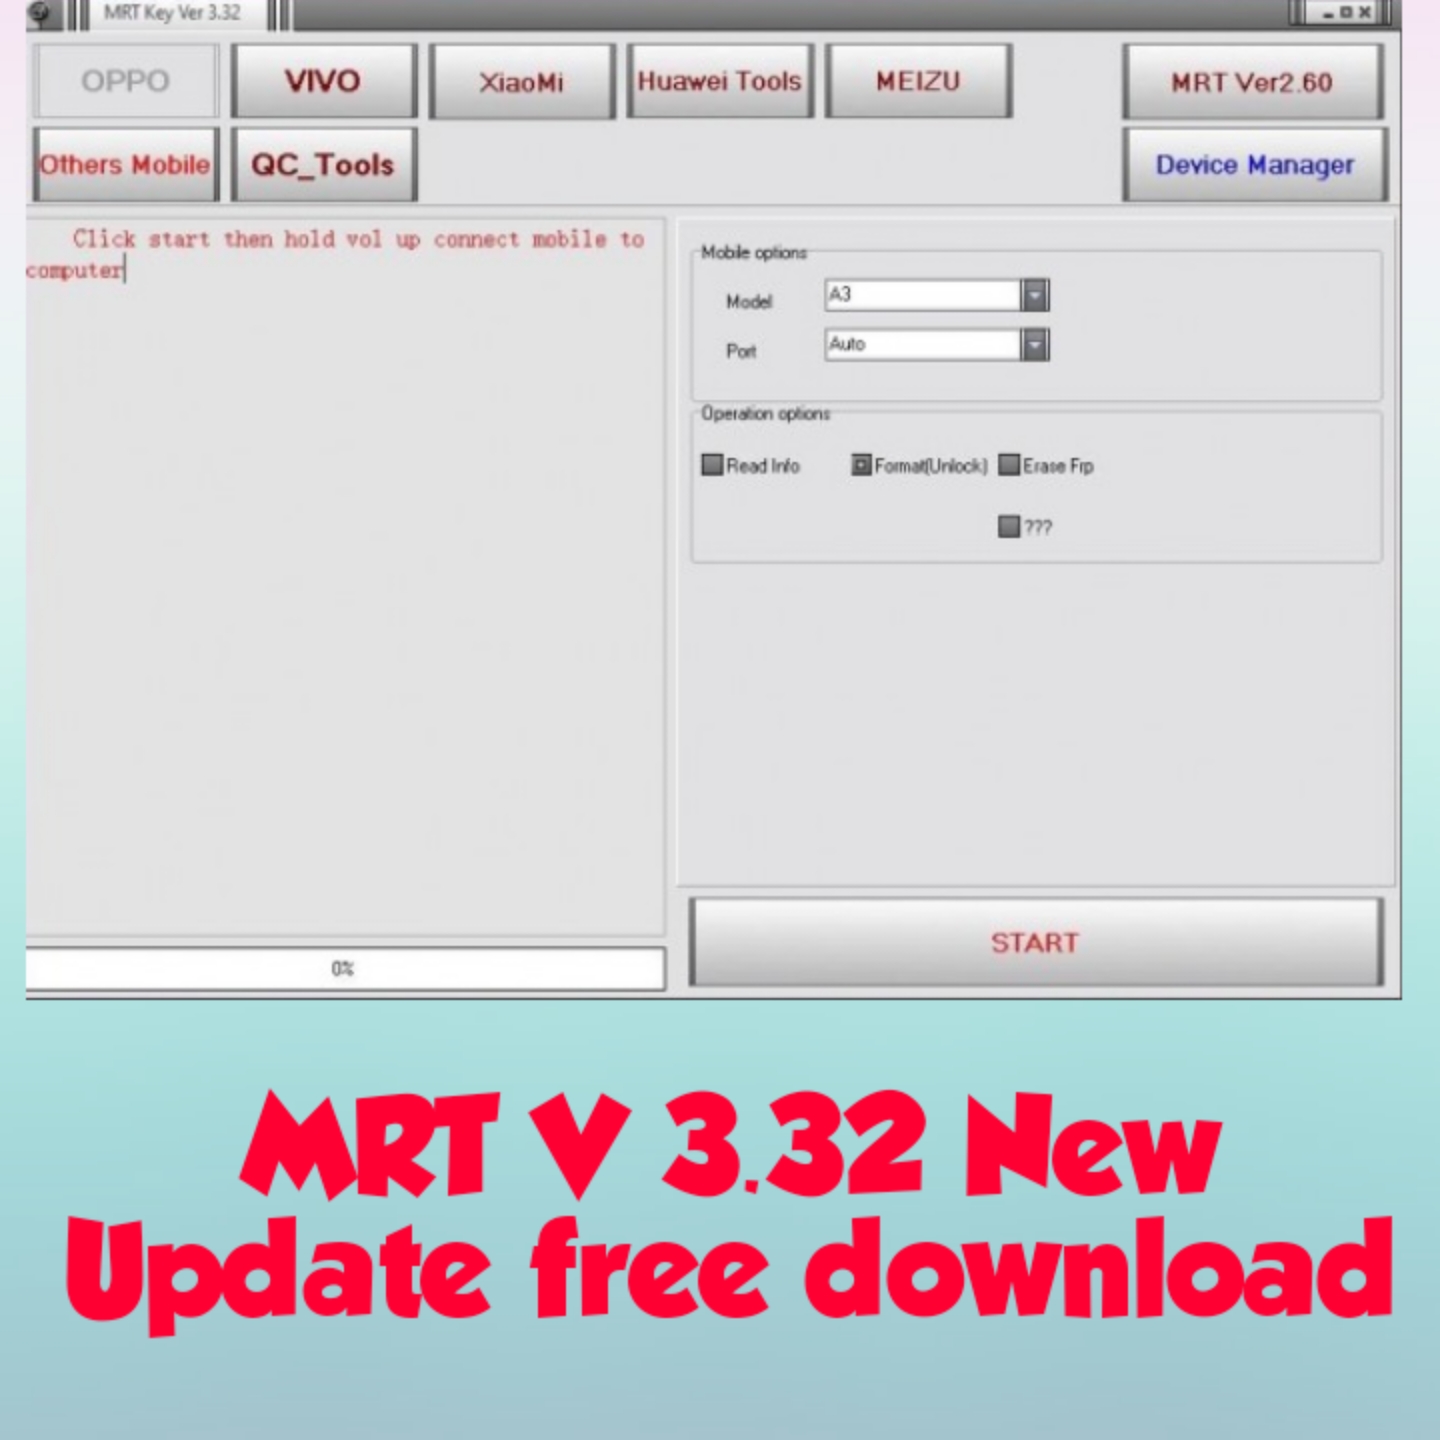 MRT V 3.32 New Update free download